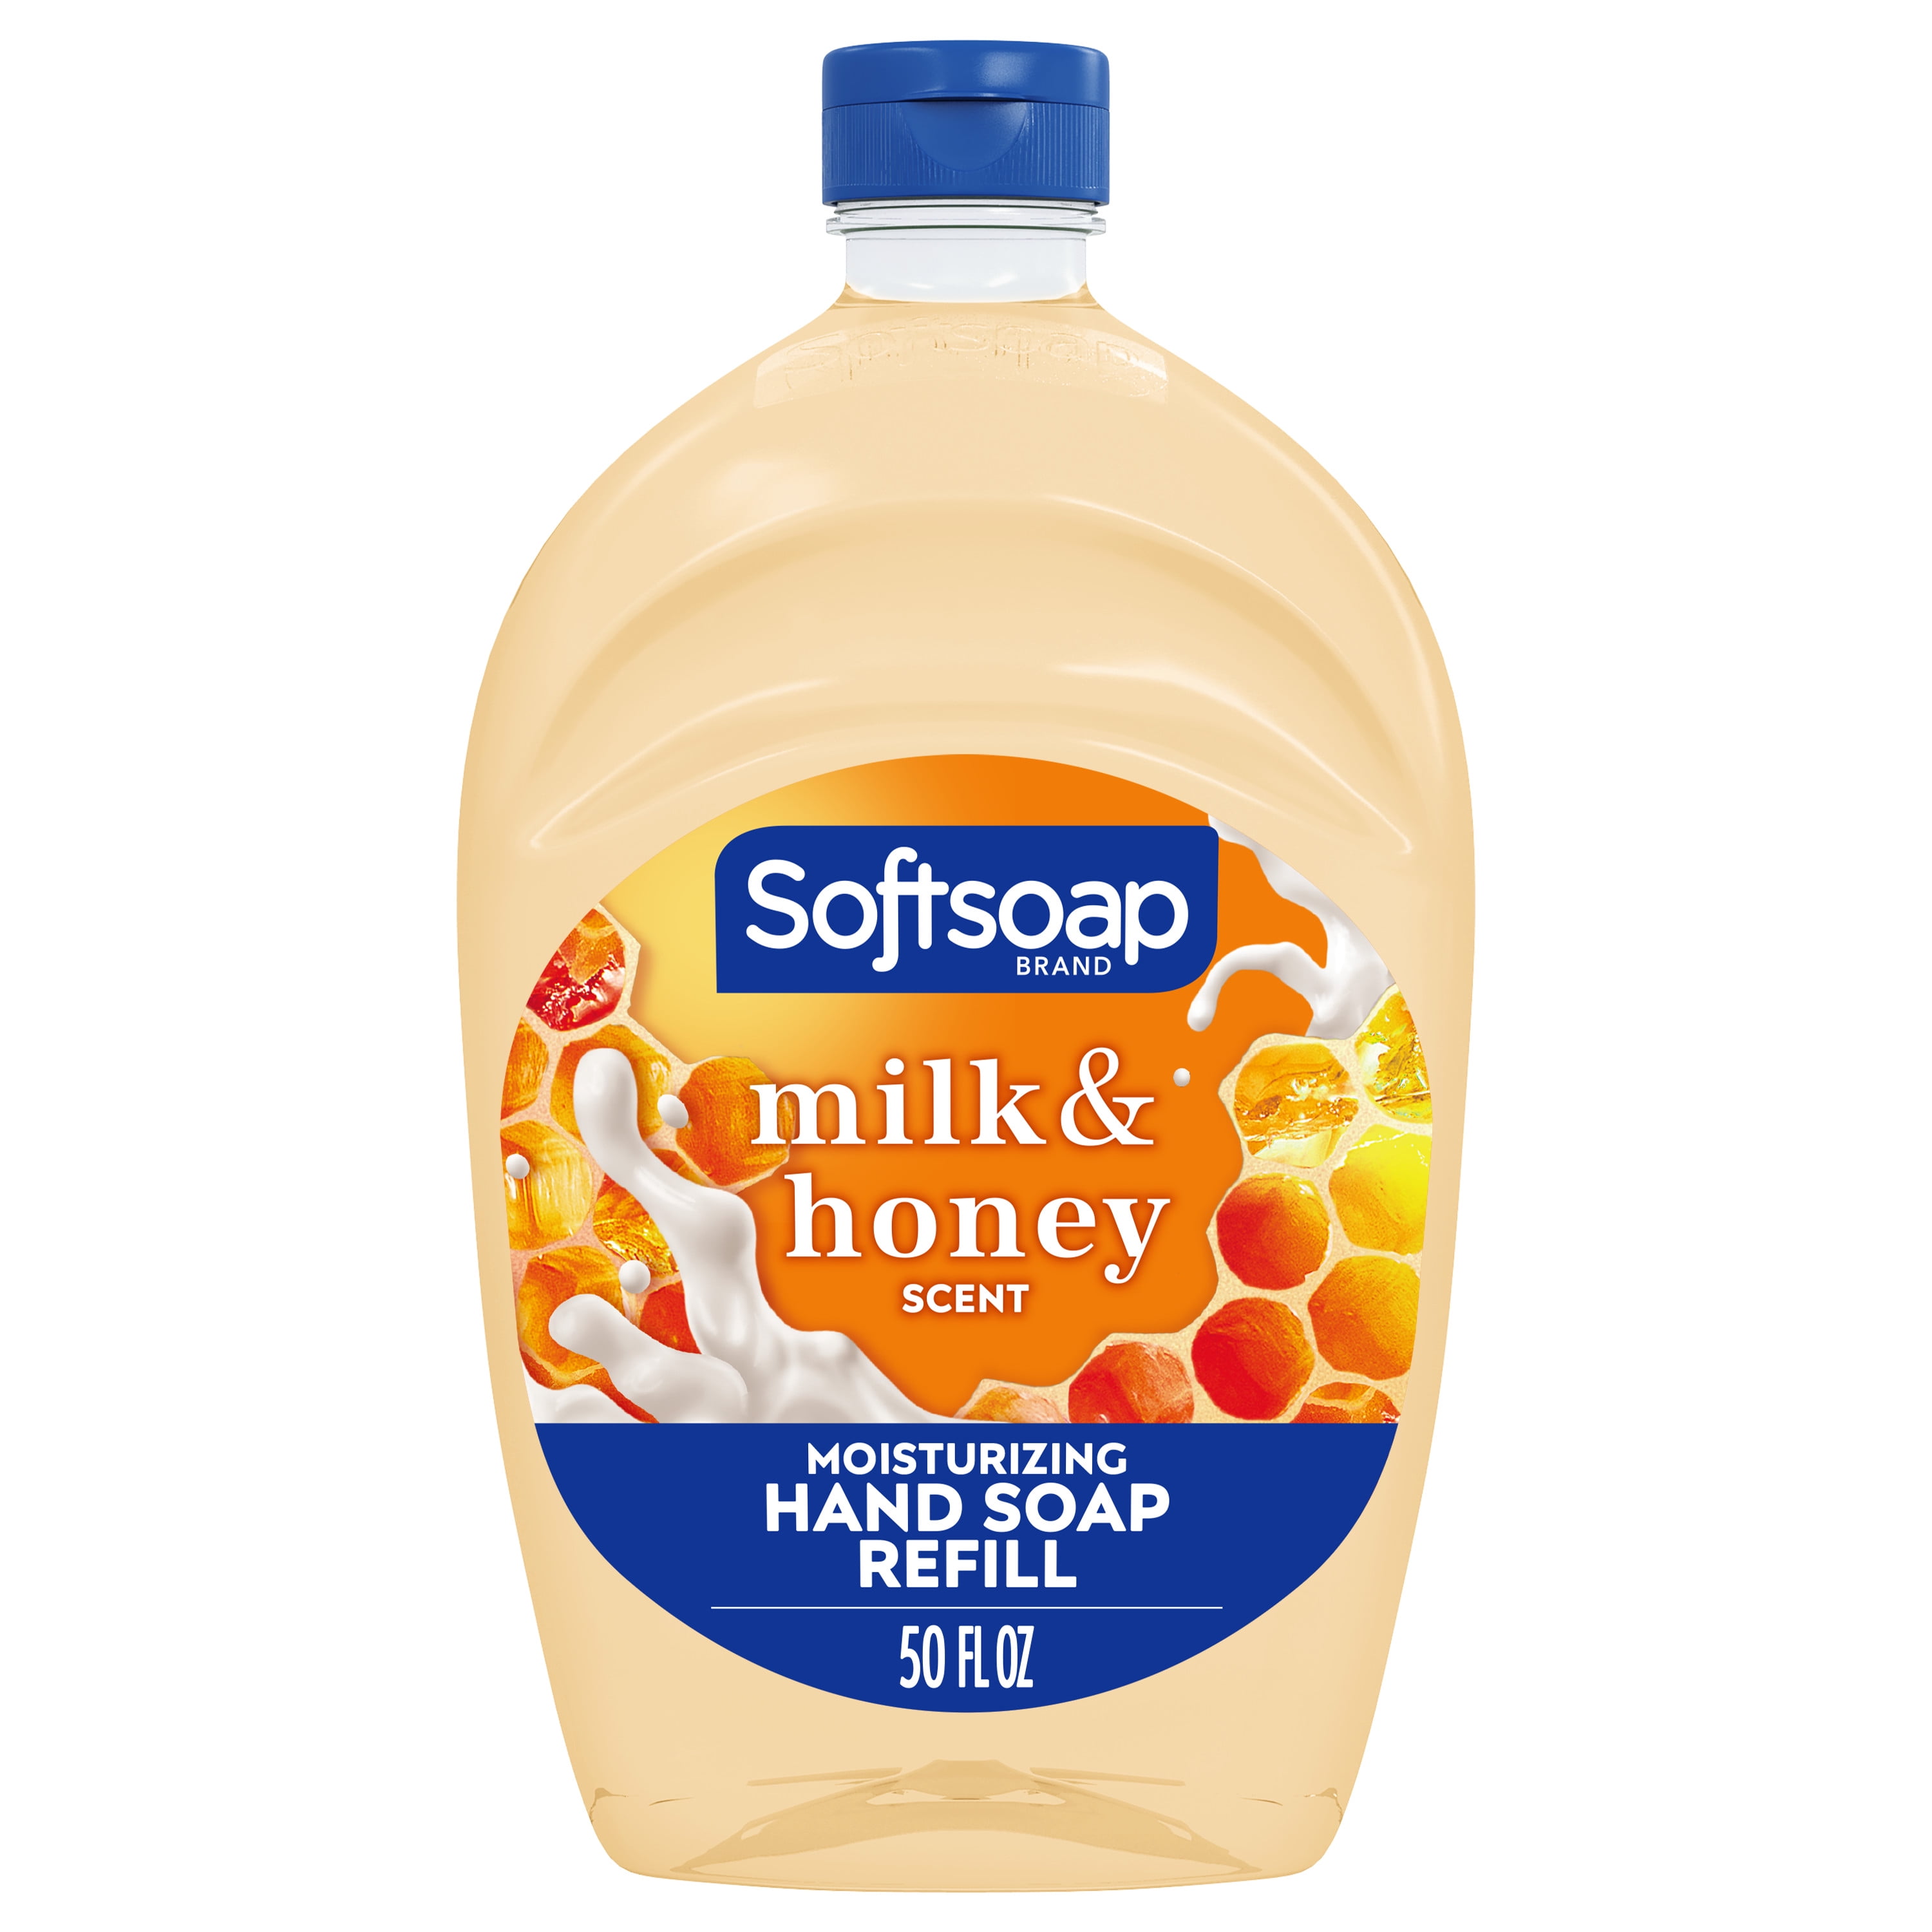 Softsoap Liquid Hand Soap Refill, Milk and Golden Honey - 50 fl oz bottle